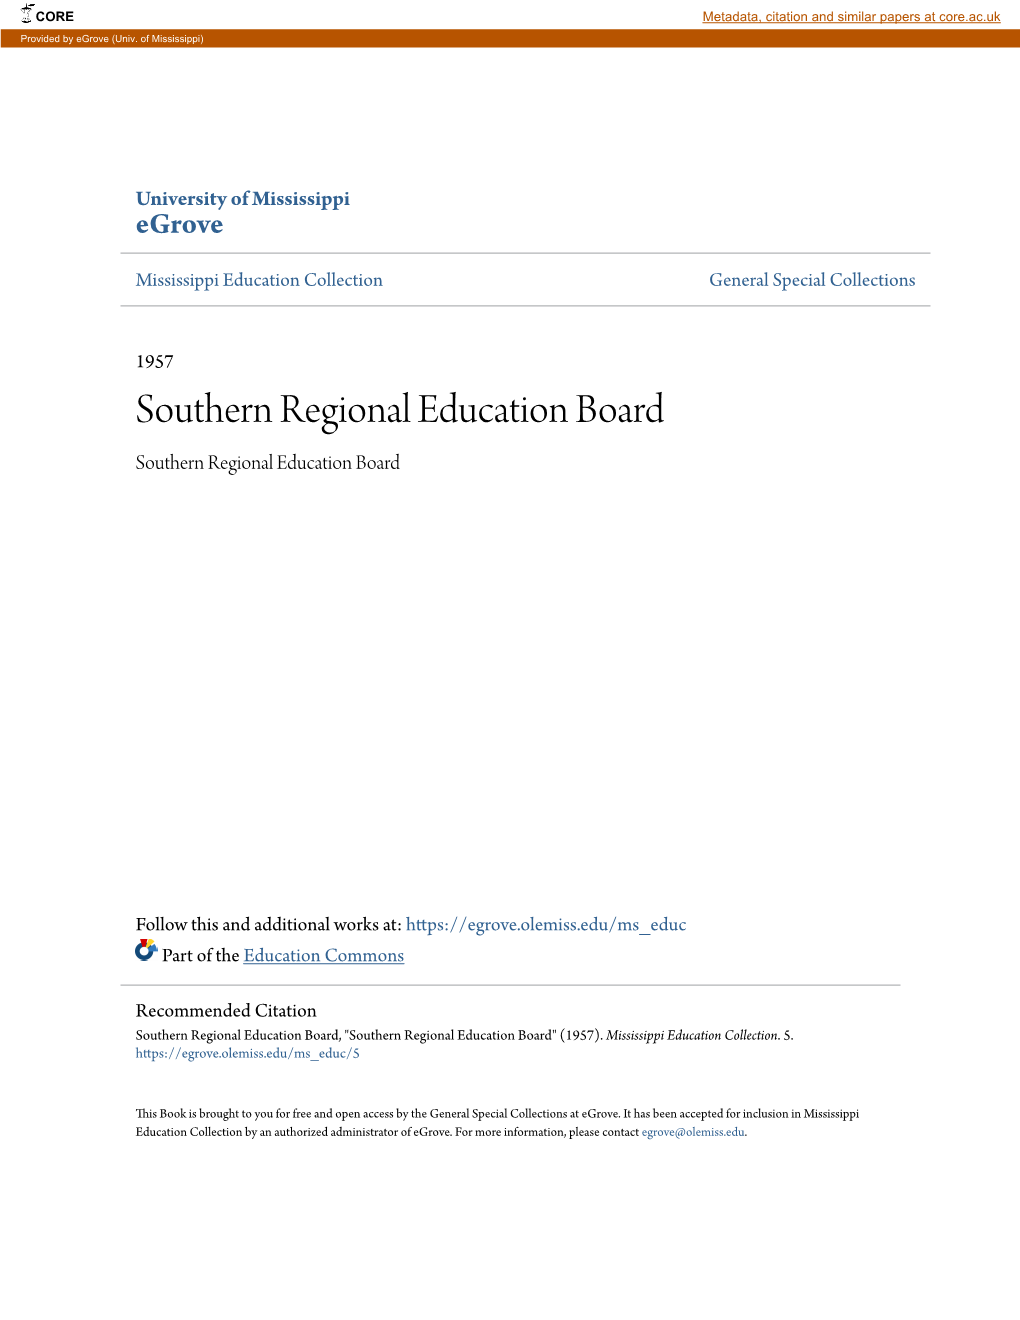 Southern Regional Education Board Southern Regional Education Board